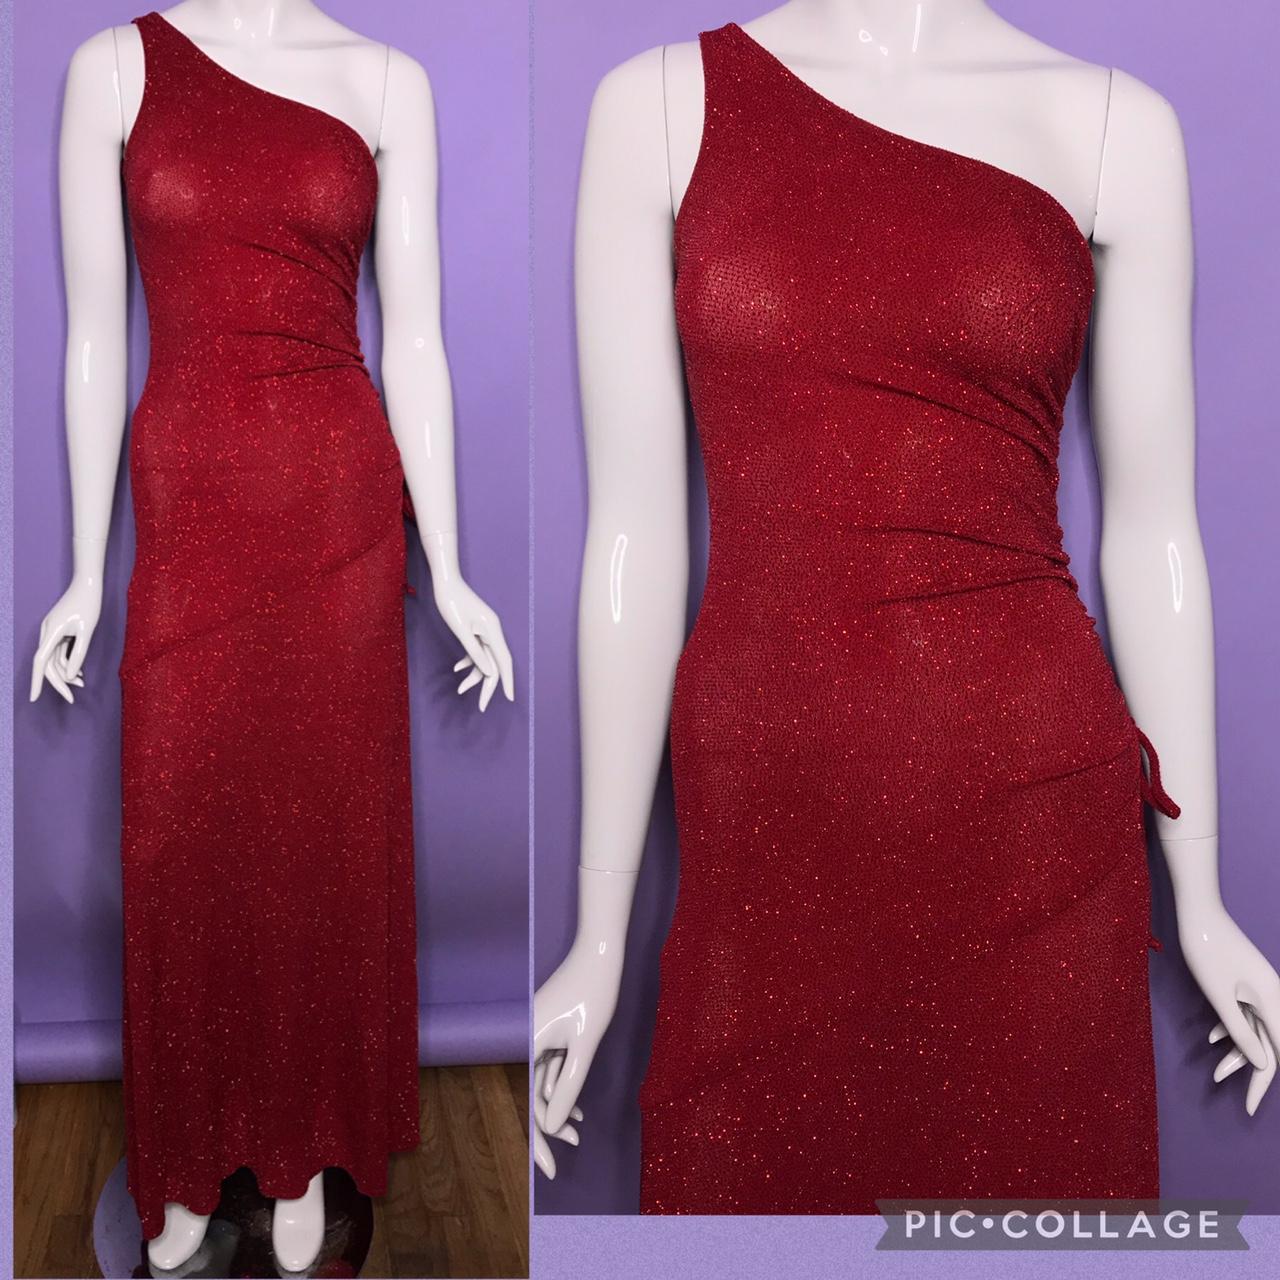 Vintage 90s Red Glittery one shoulder dress!🌹One of... - Depop